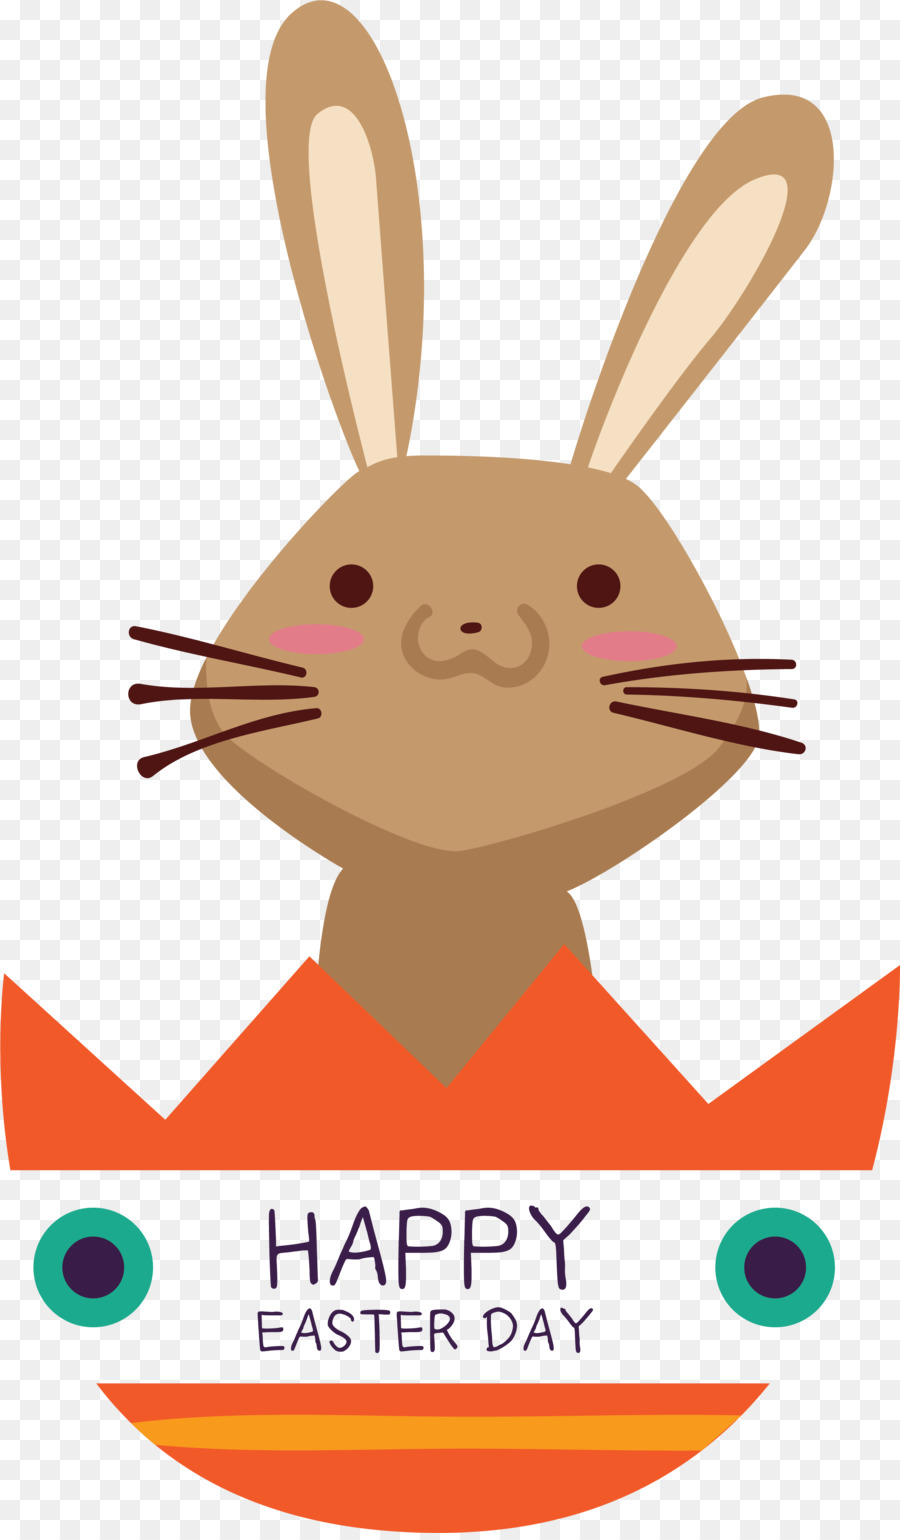 Easter Bunny Leporids Xám - Dễ thương màu xám Bunny nhãn